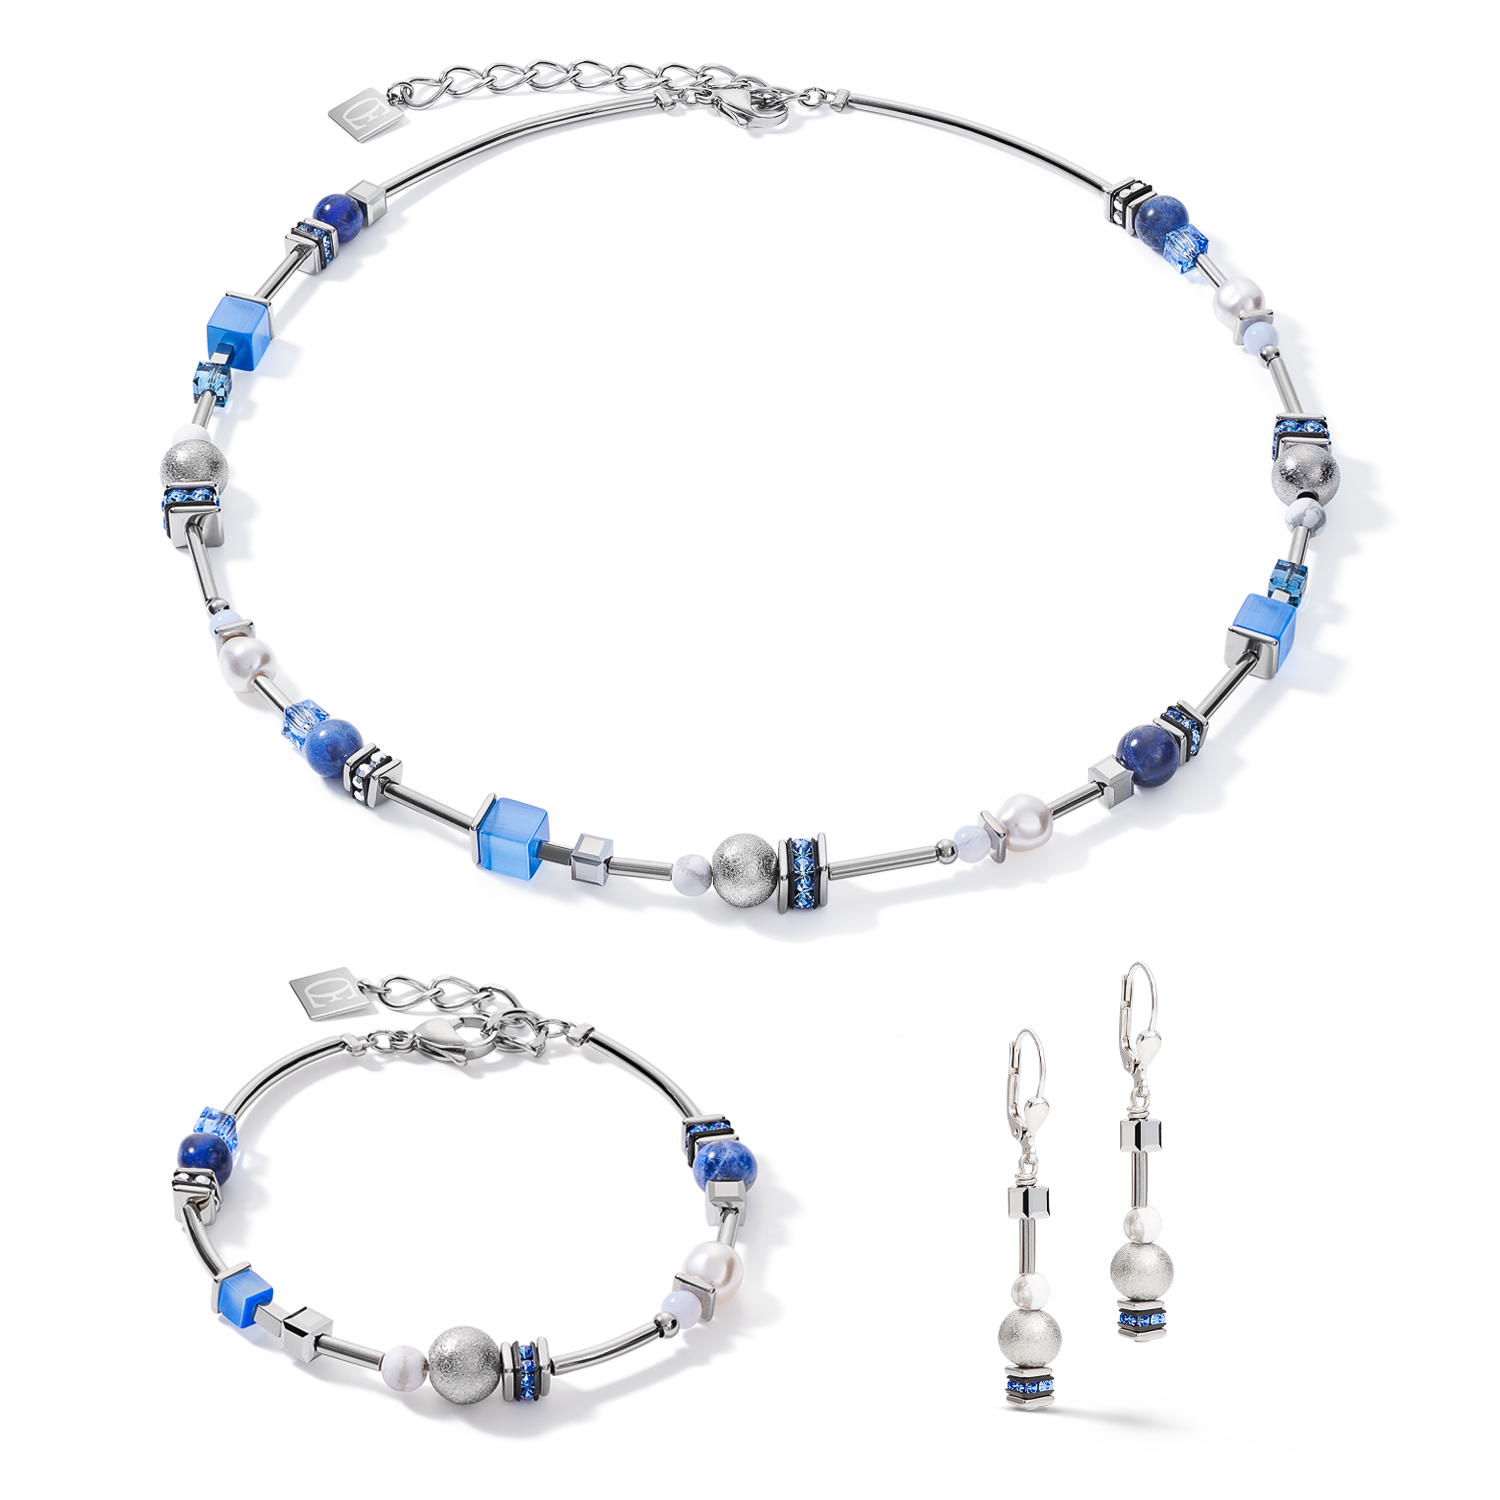 Bracelet Pearls & Cubes gemstones silver-blue